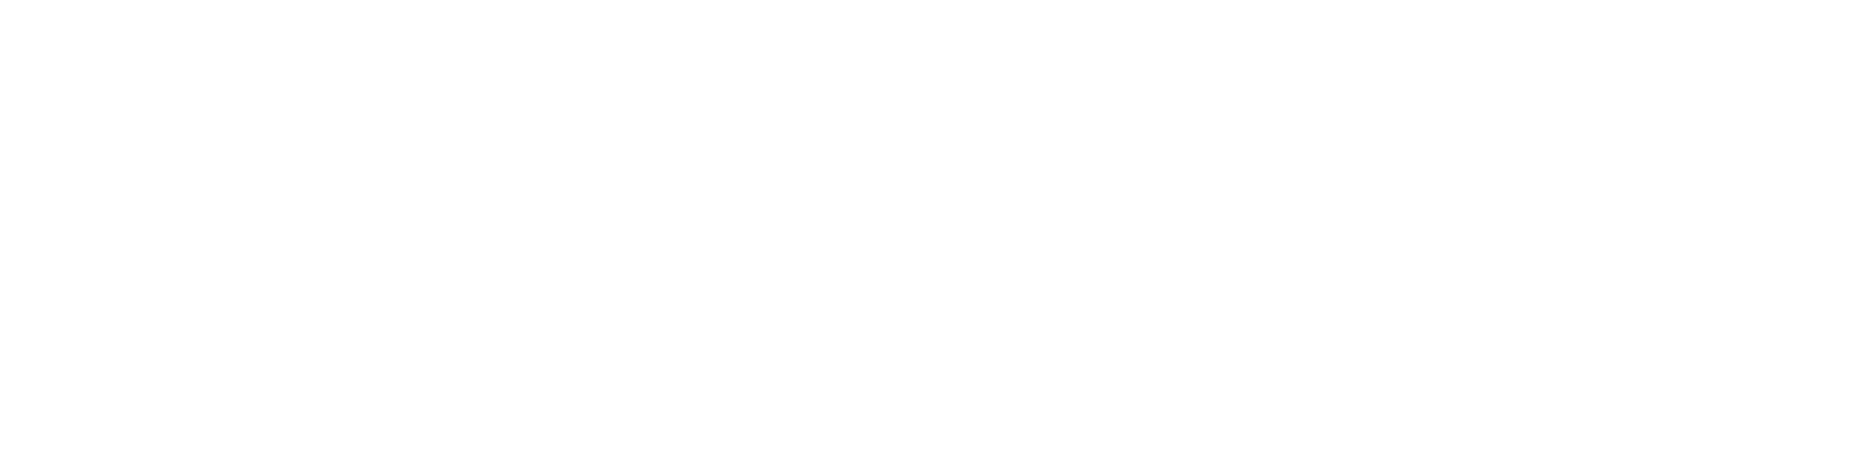 VersaTech's logo in white